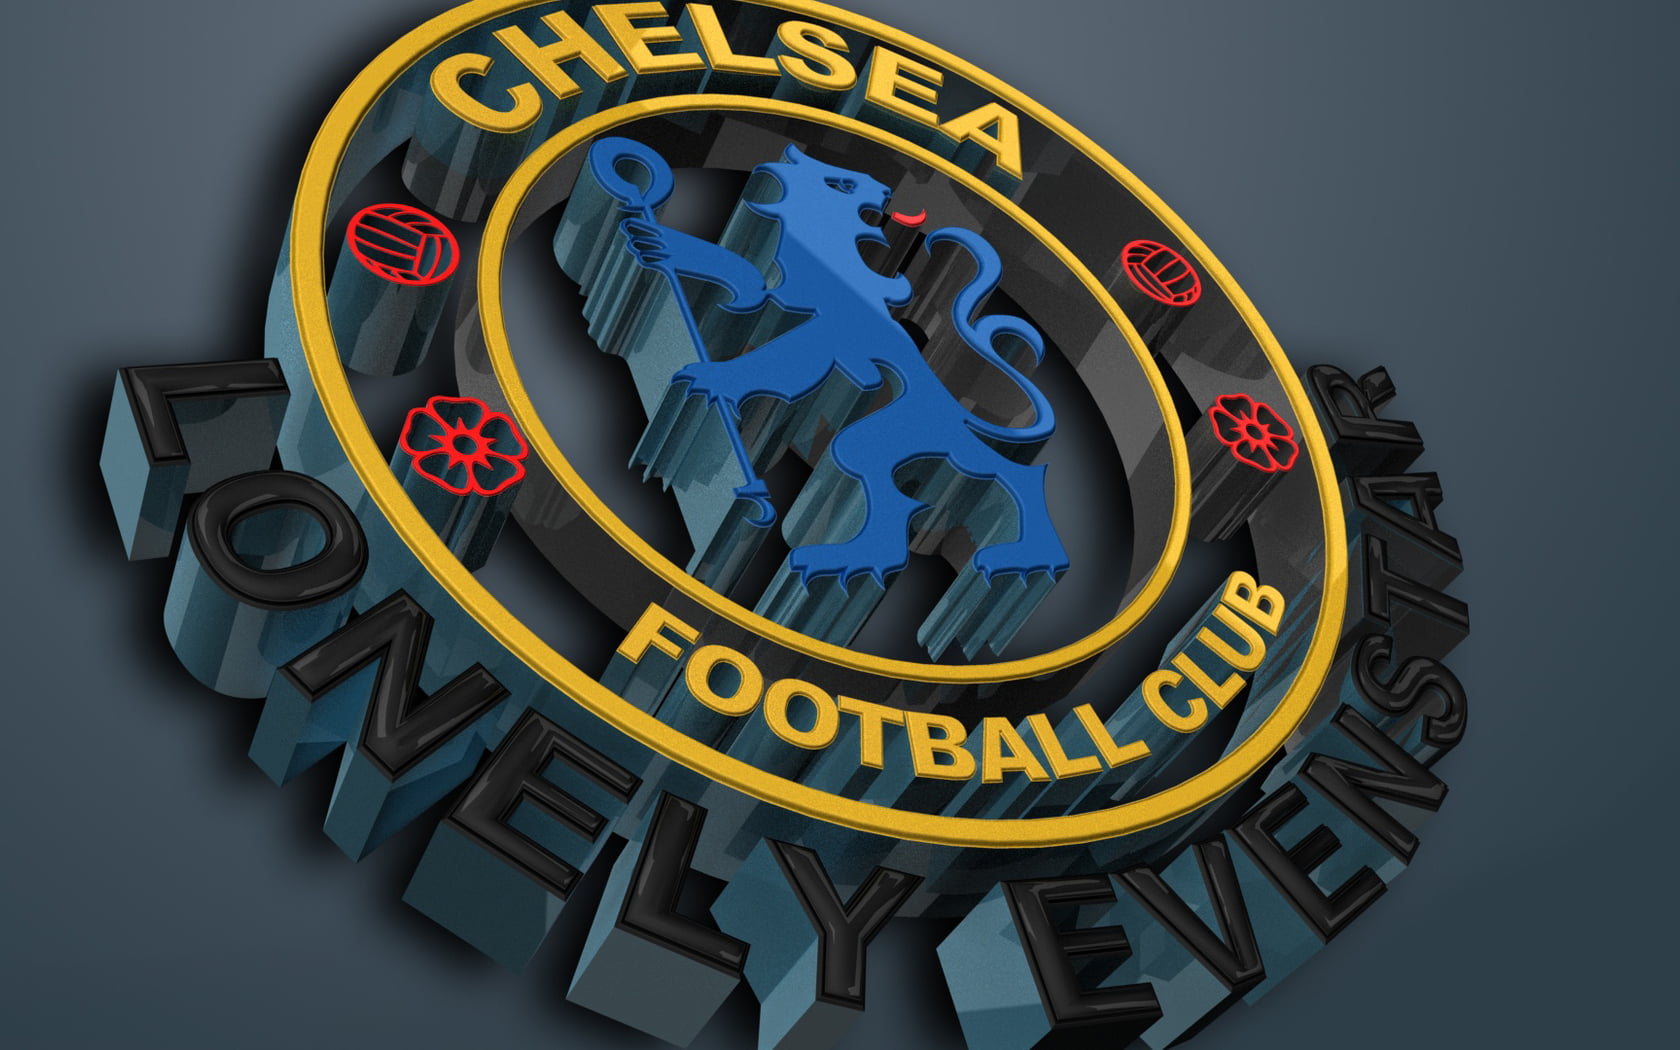 Chelsea Logo 3D, Chelsea Football Club wallpaper, Sports, text